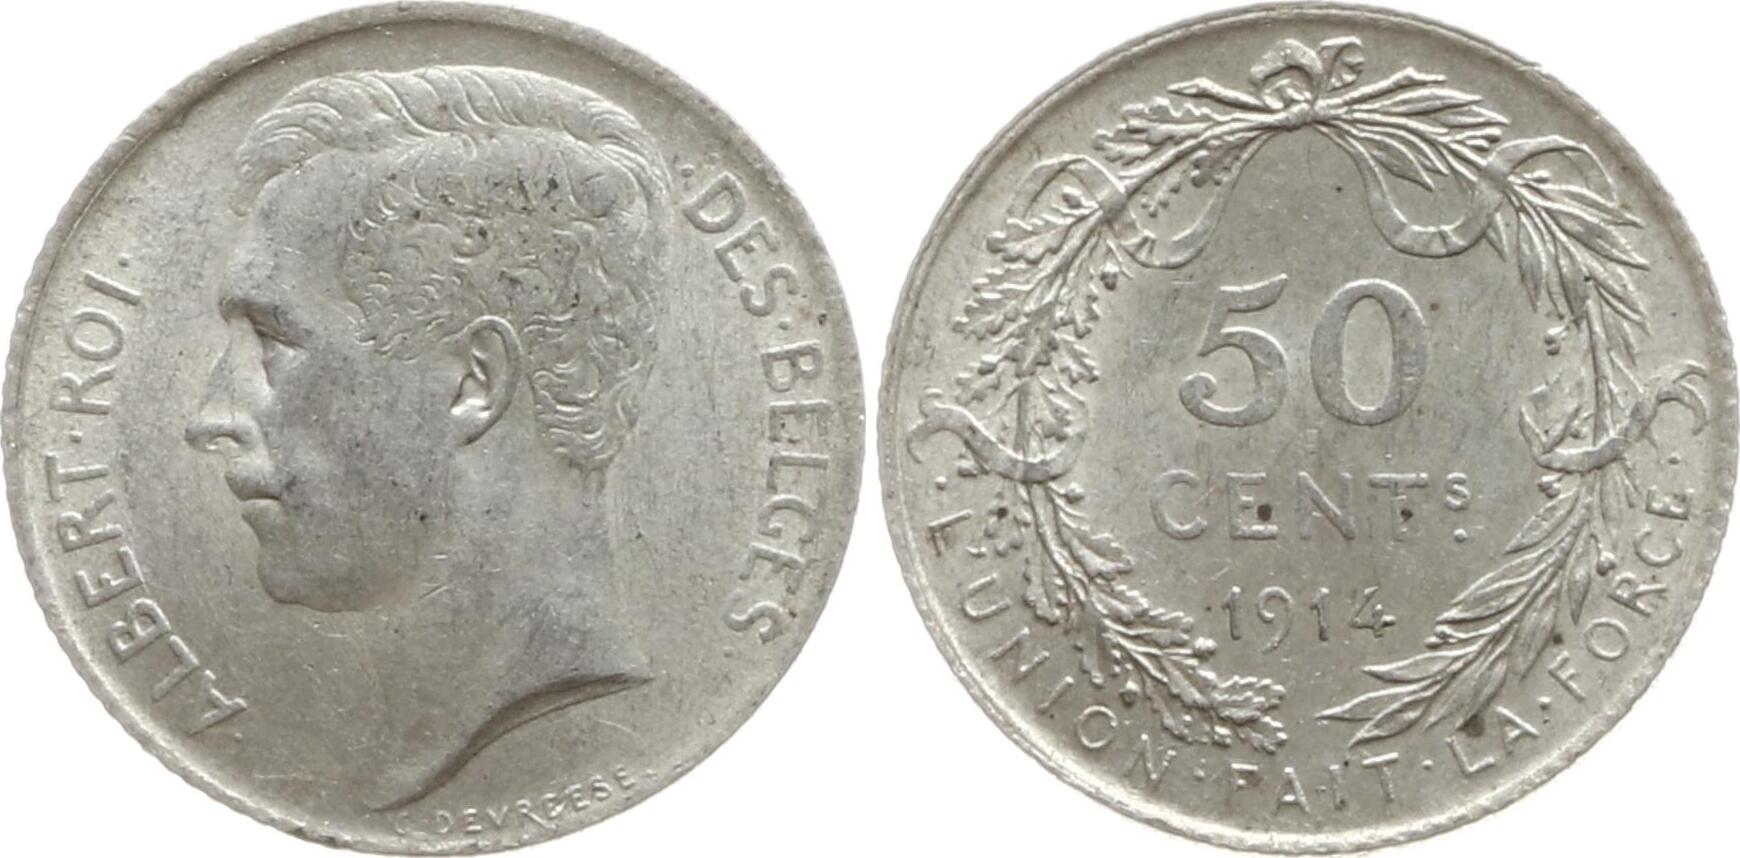 belgien-k-nigreich-50-centimes-1914-albert-i-1909-1934-cents-fast